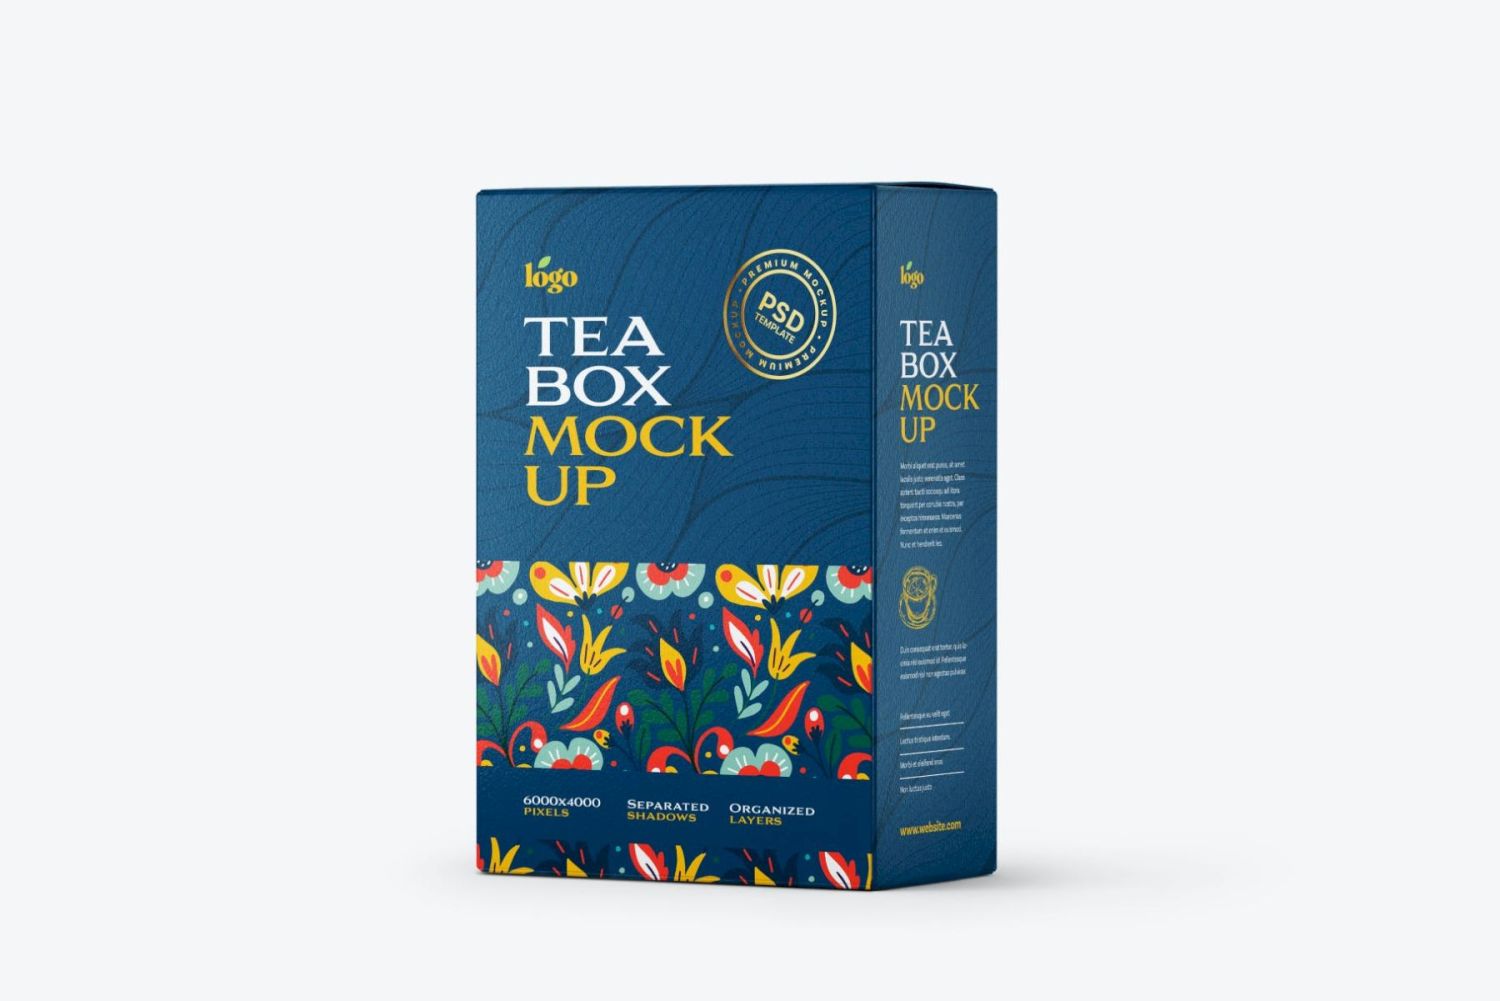 茶盒包装样机套装 Tea Box Packaging Mockup Set插图21